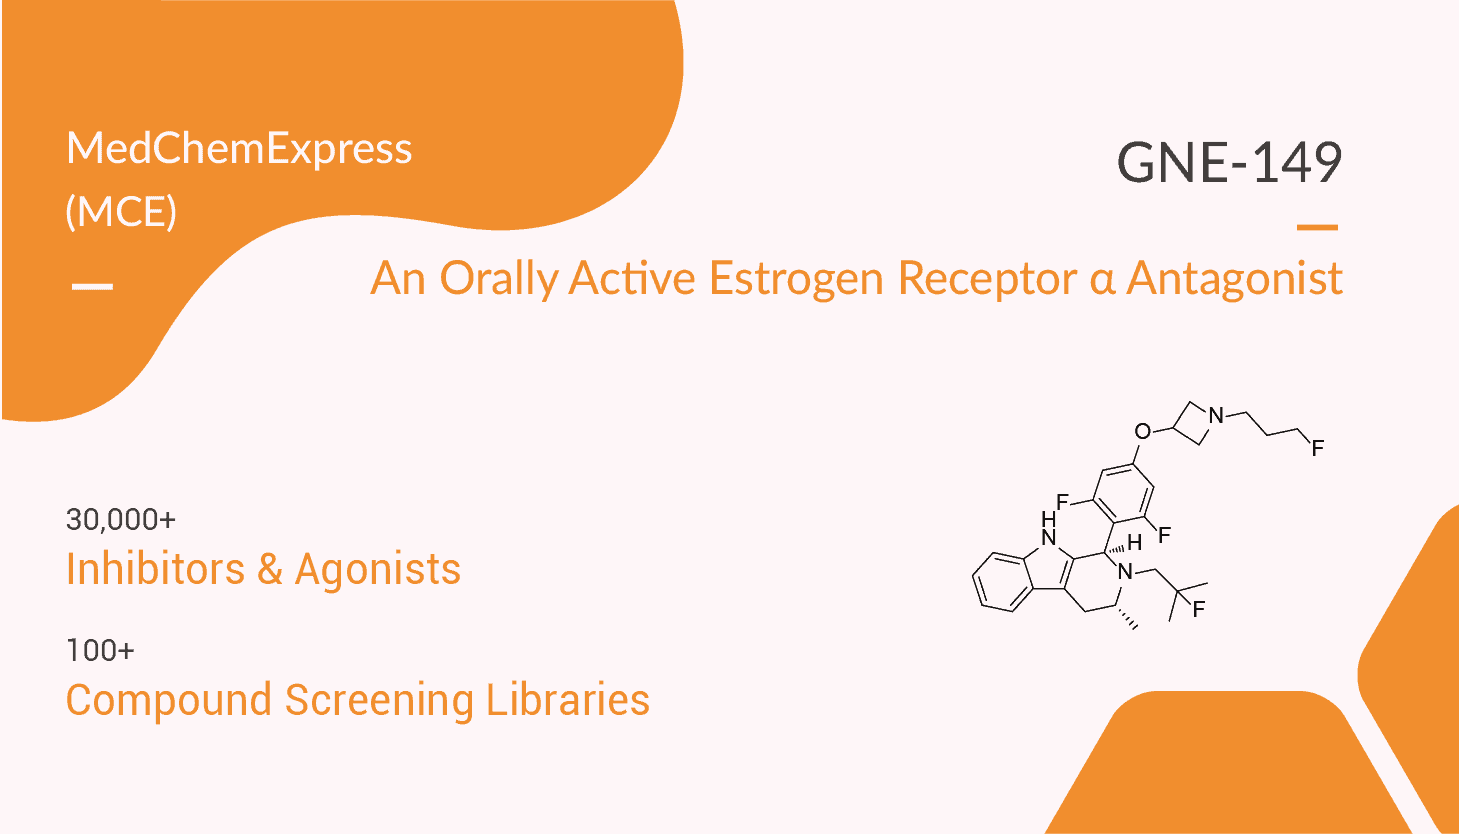 GNE-149 is an Orally Active Estrogen Receptor α Antagonist